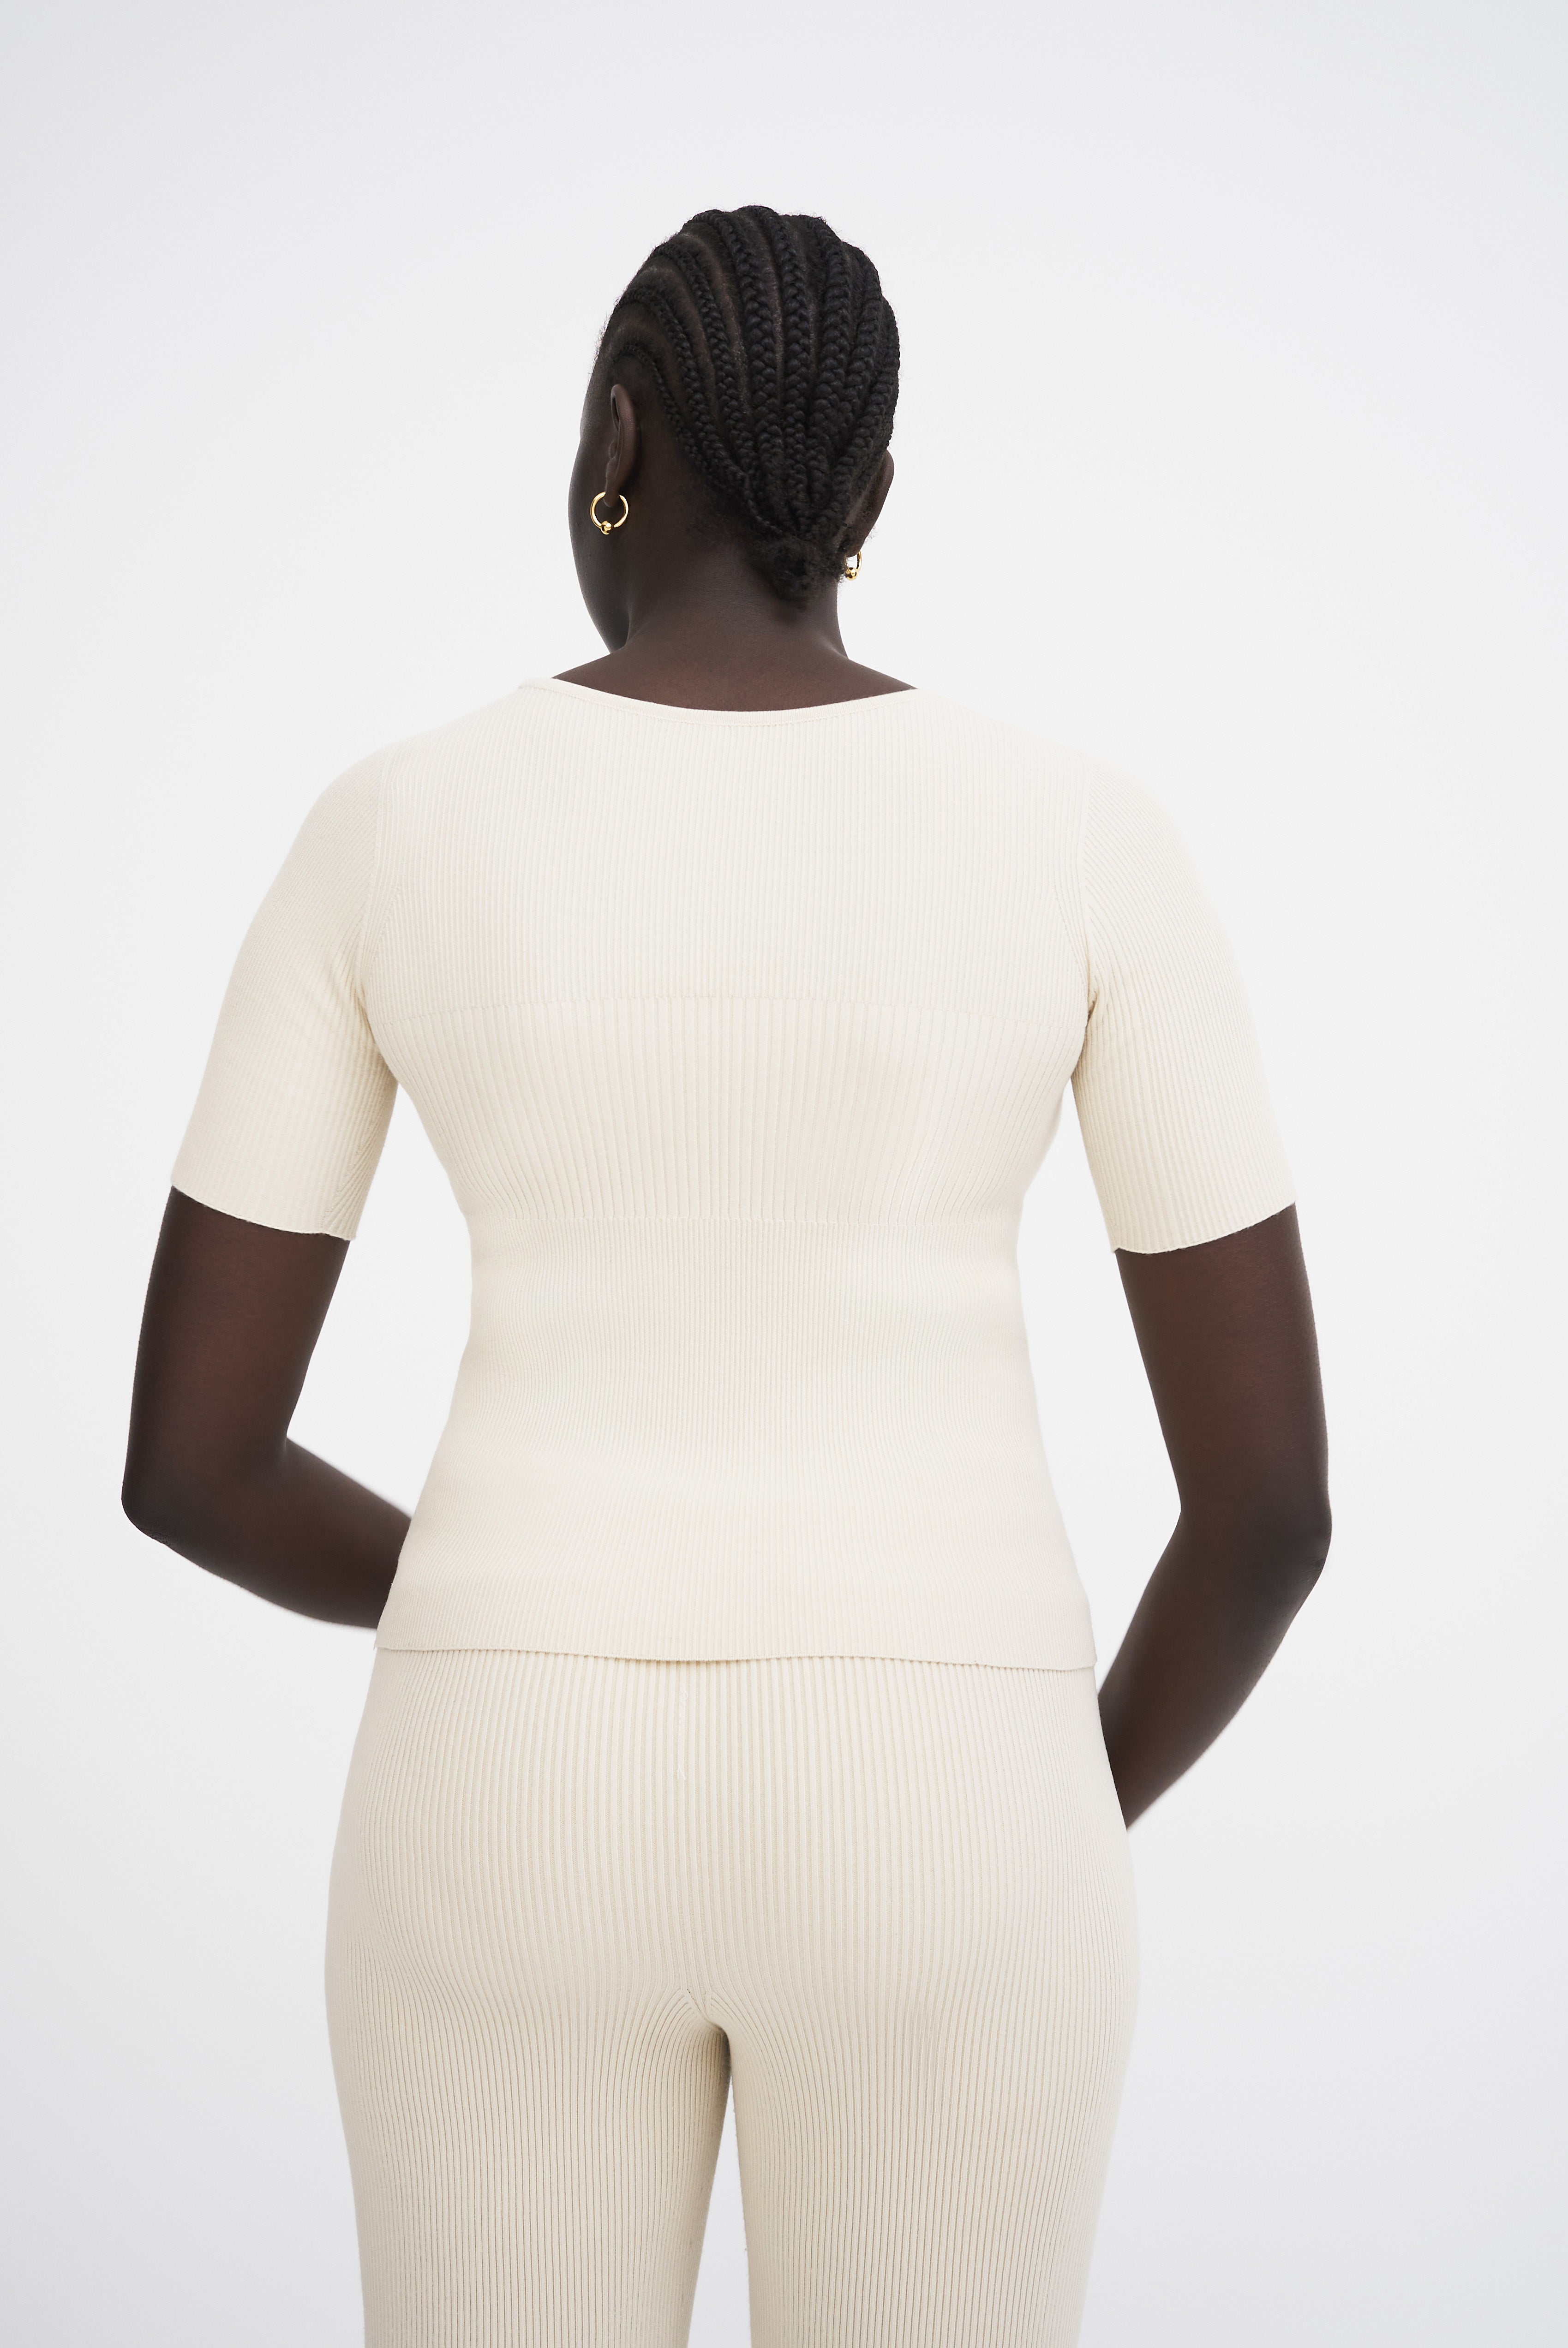 AERON SHELL Ribbed-knit bra-detailed top – cream